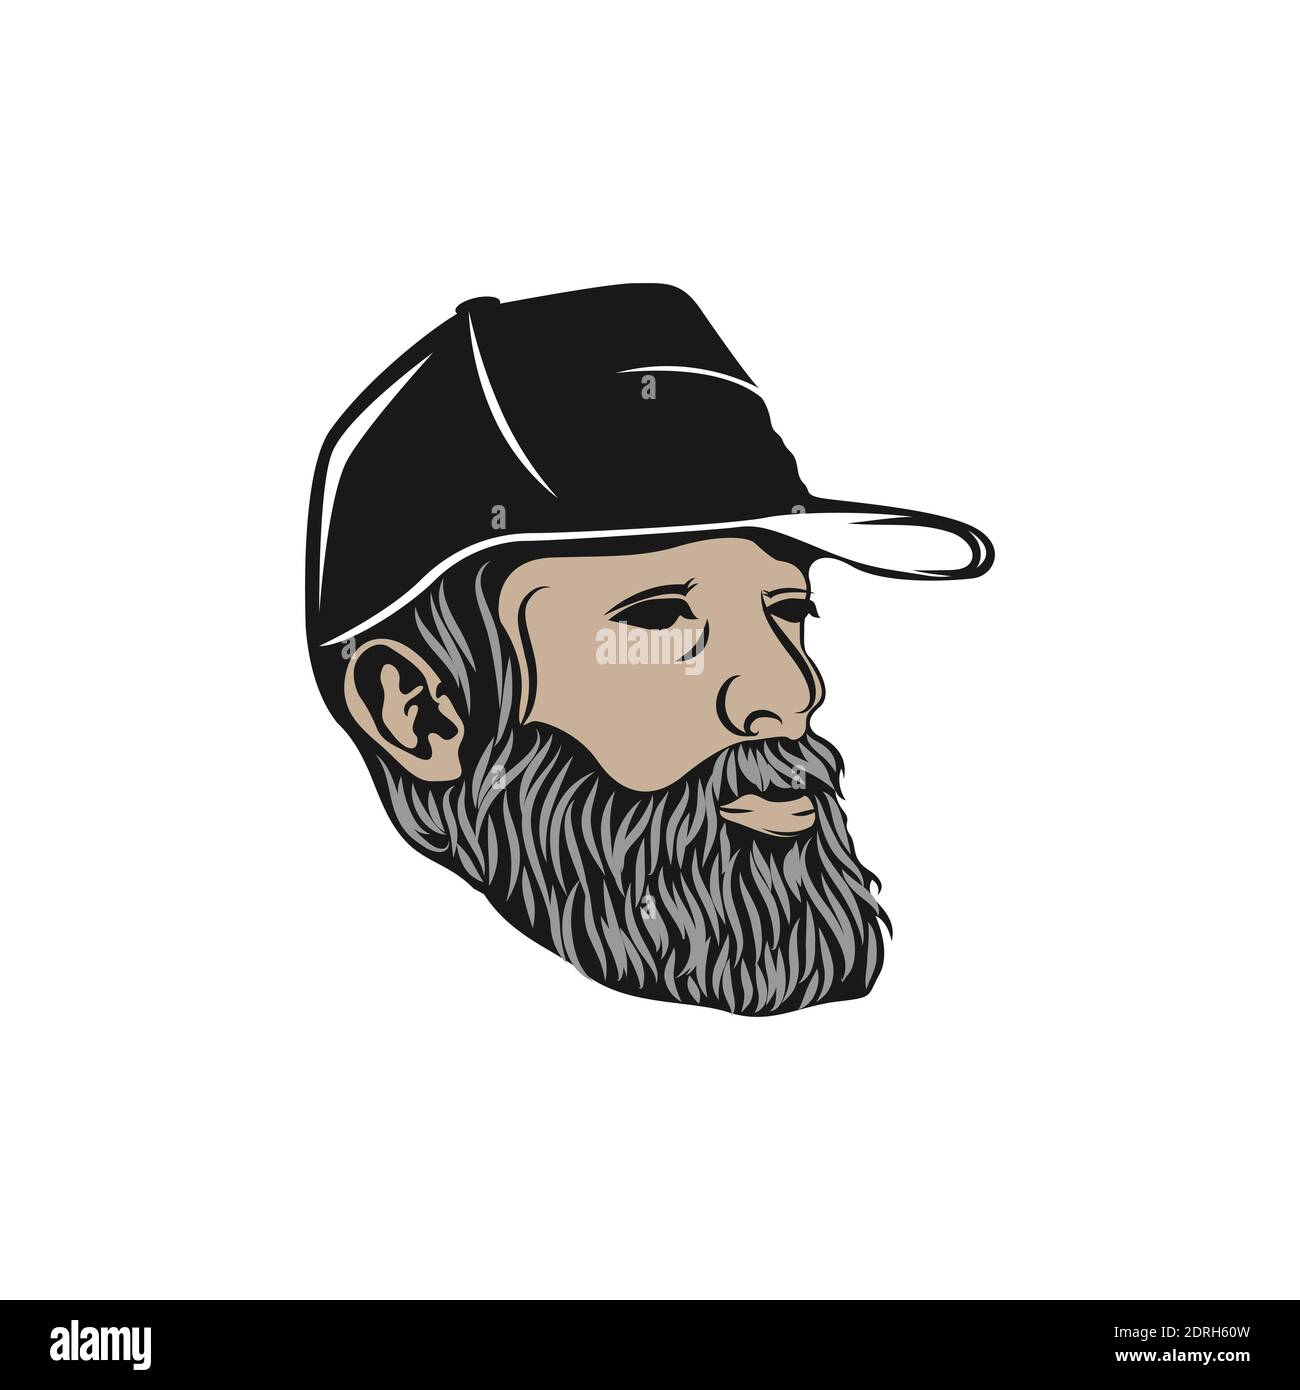 Mascot logo illustration of a beard man.EPS 10 Stock Vector